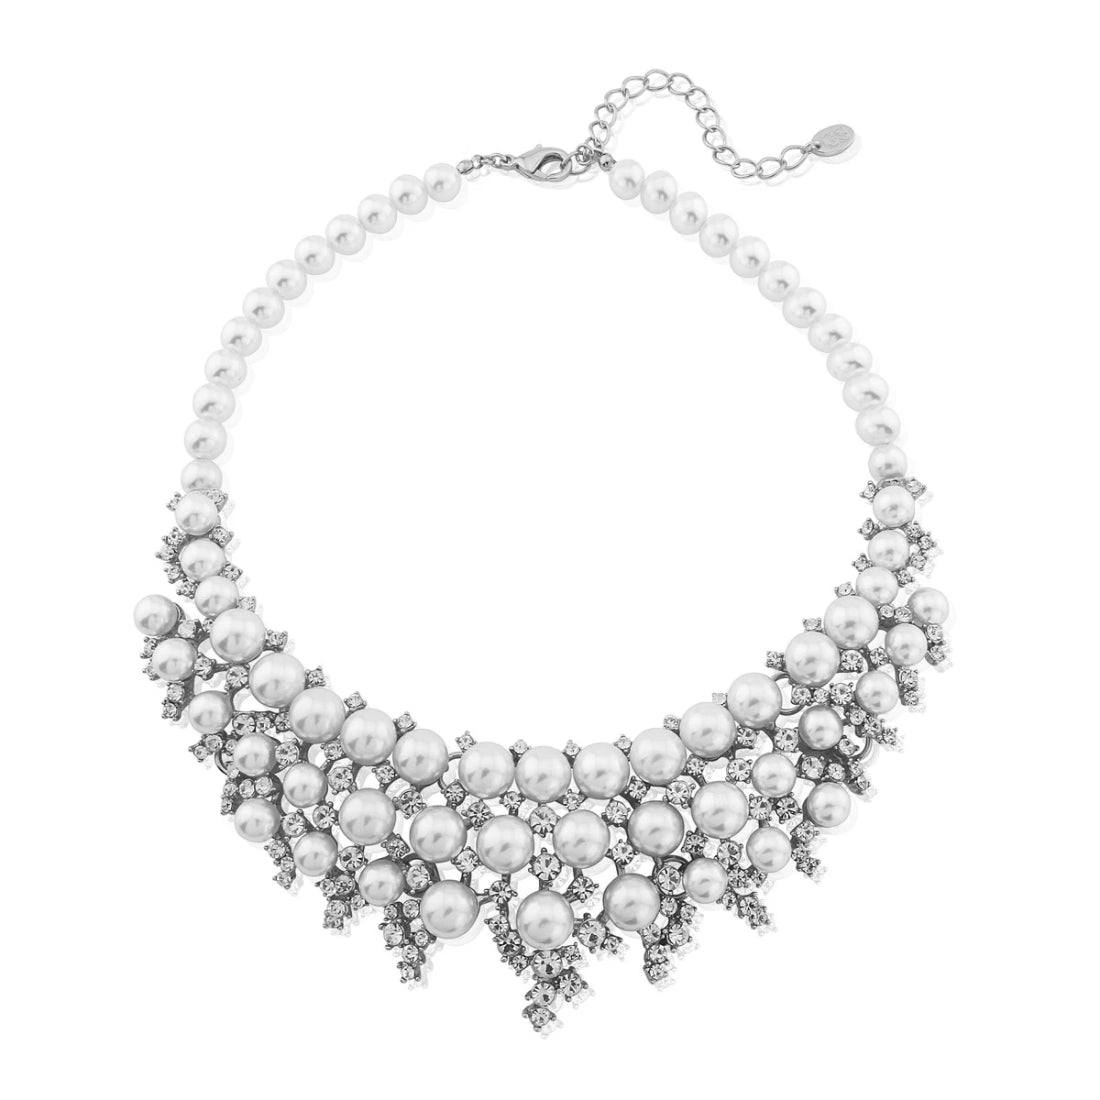 Timeless Romance Pearl Necklace | Glitzy Secrets